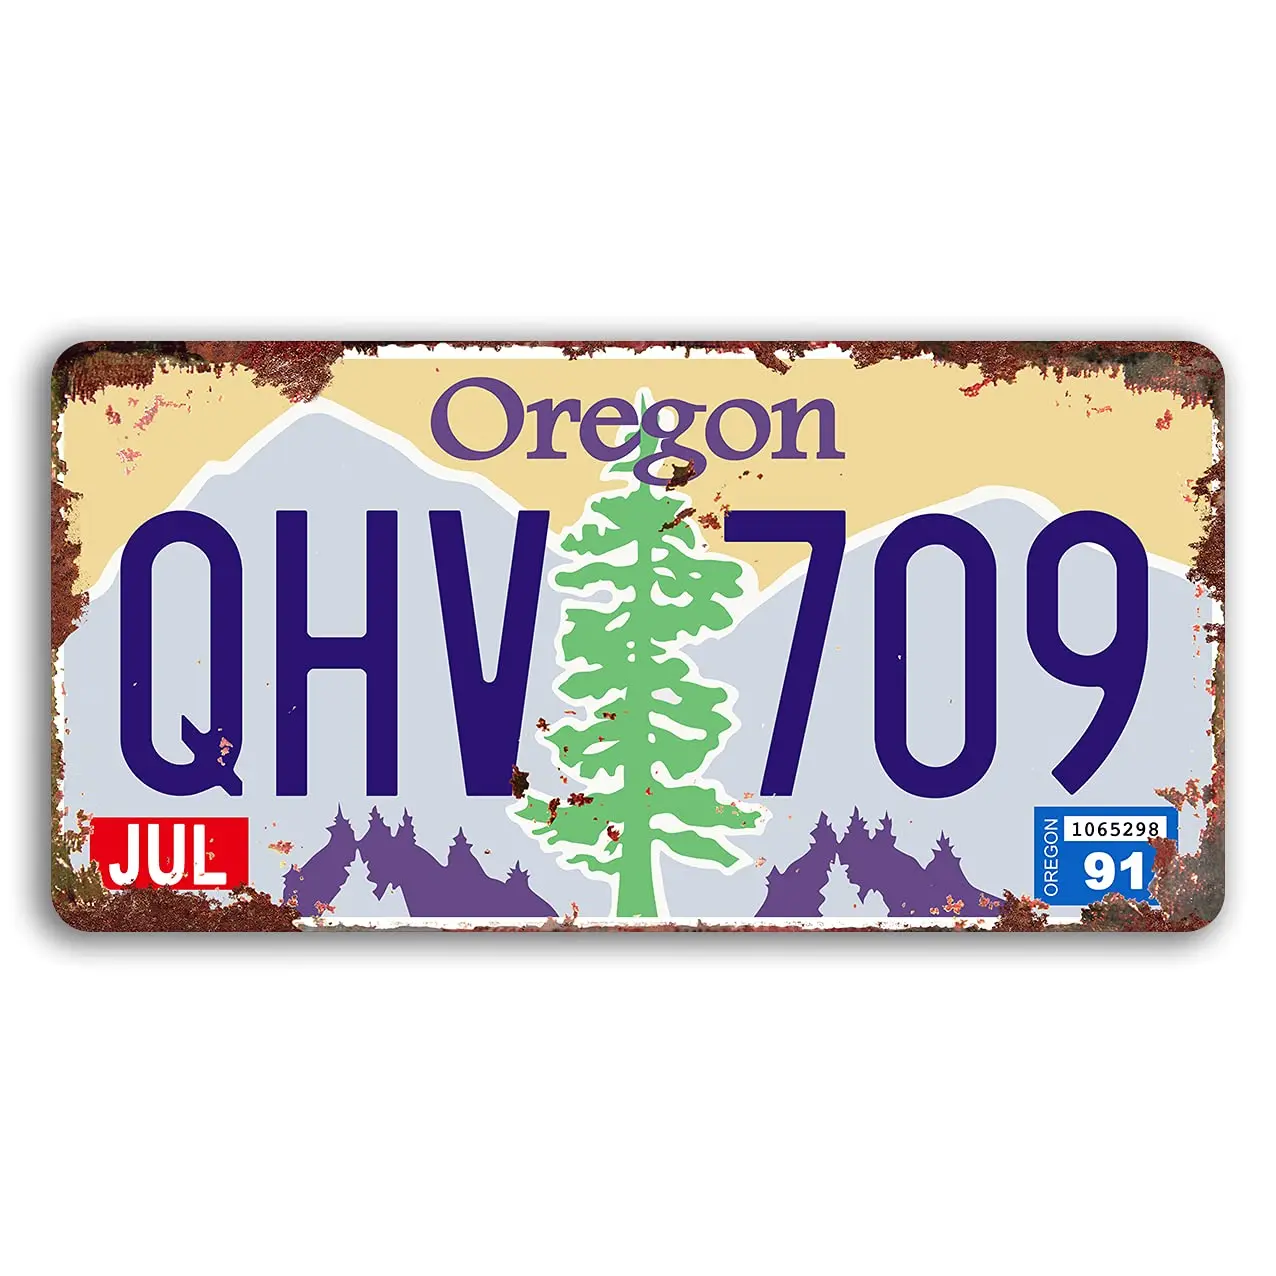 

Retro Vintage U.S. State Auto Number Tags, Embossed Prop Vanity License Plate, 12"x6" (Oregon)